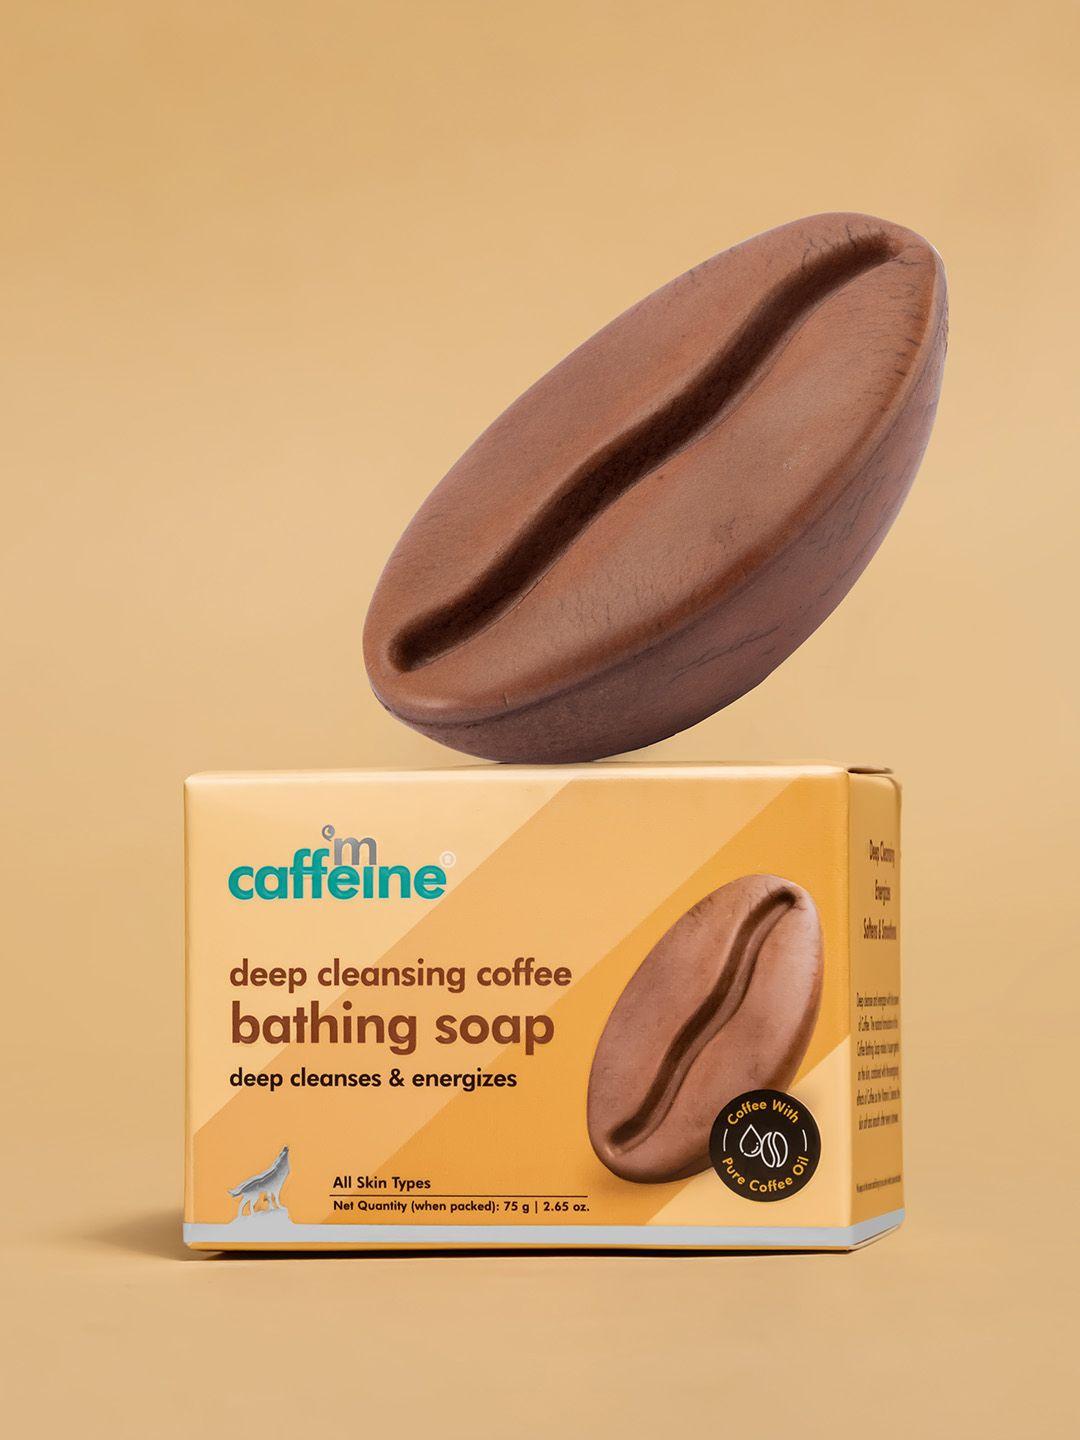 mcaffeine deep cleansing coffee bathing soap duo - 75g each